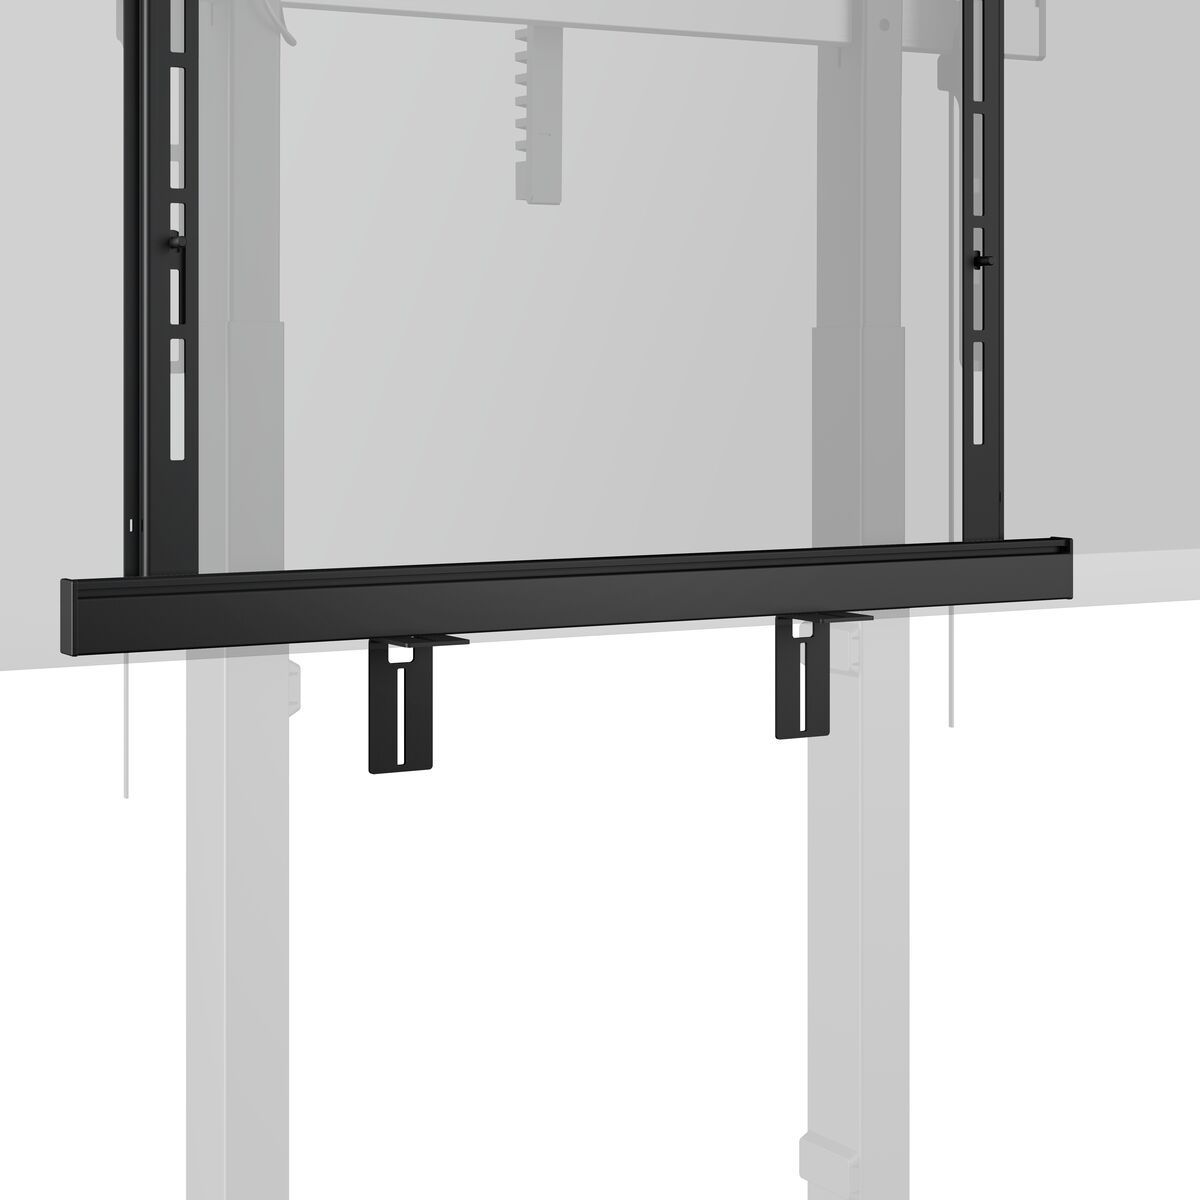 VOGELS RISE A121 - Soundbar mount for motorised RISE display lifts